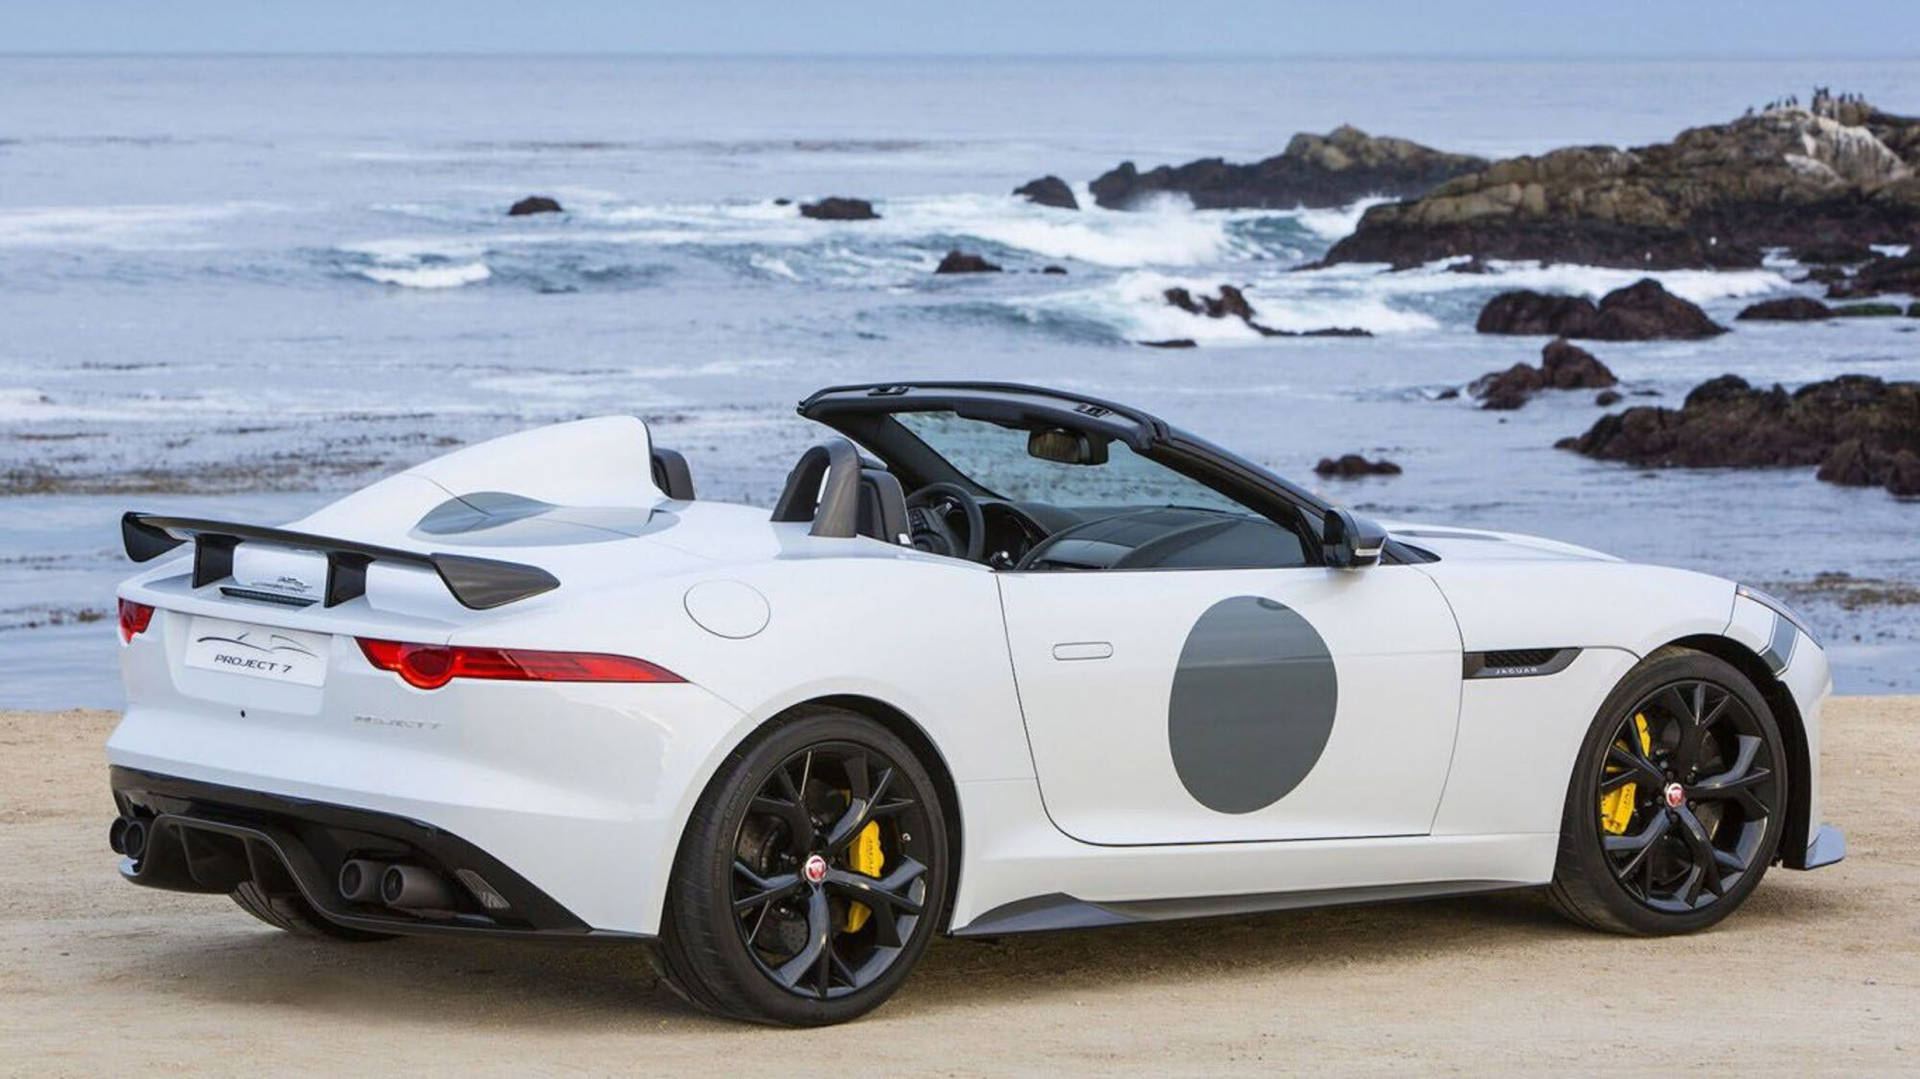 Luxurious Modern Jaguar Car On A Beach Background